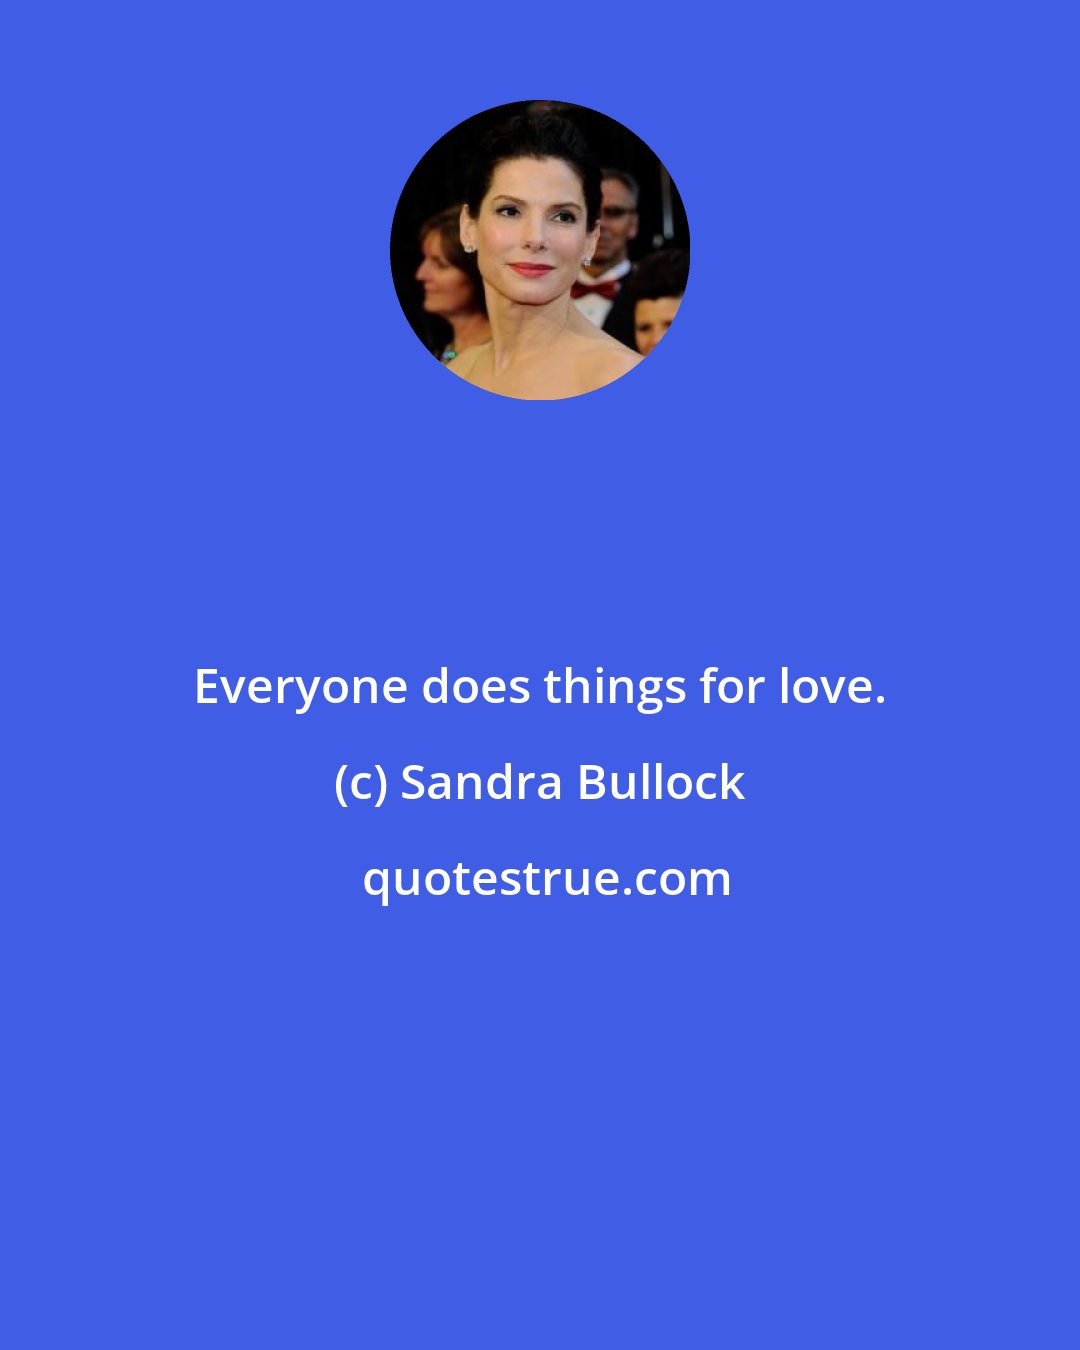 Sandra Bullock: Everyone does things for love.